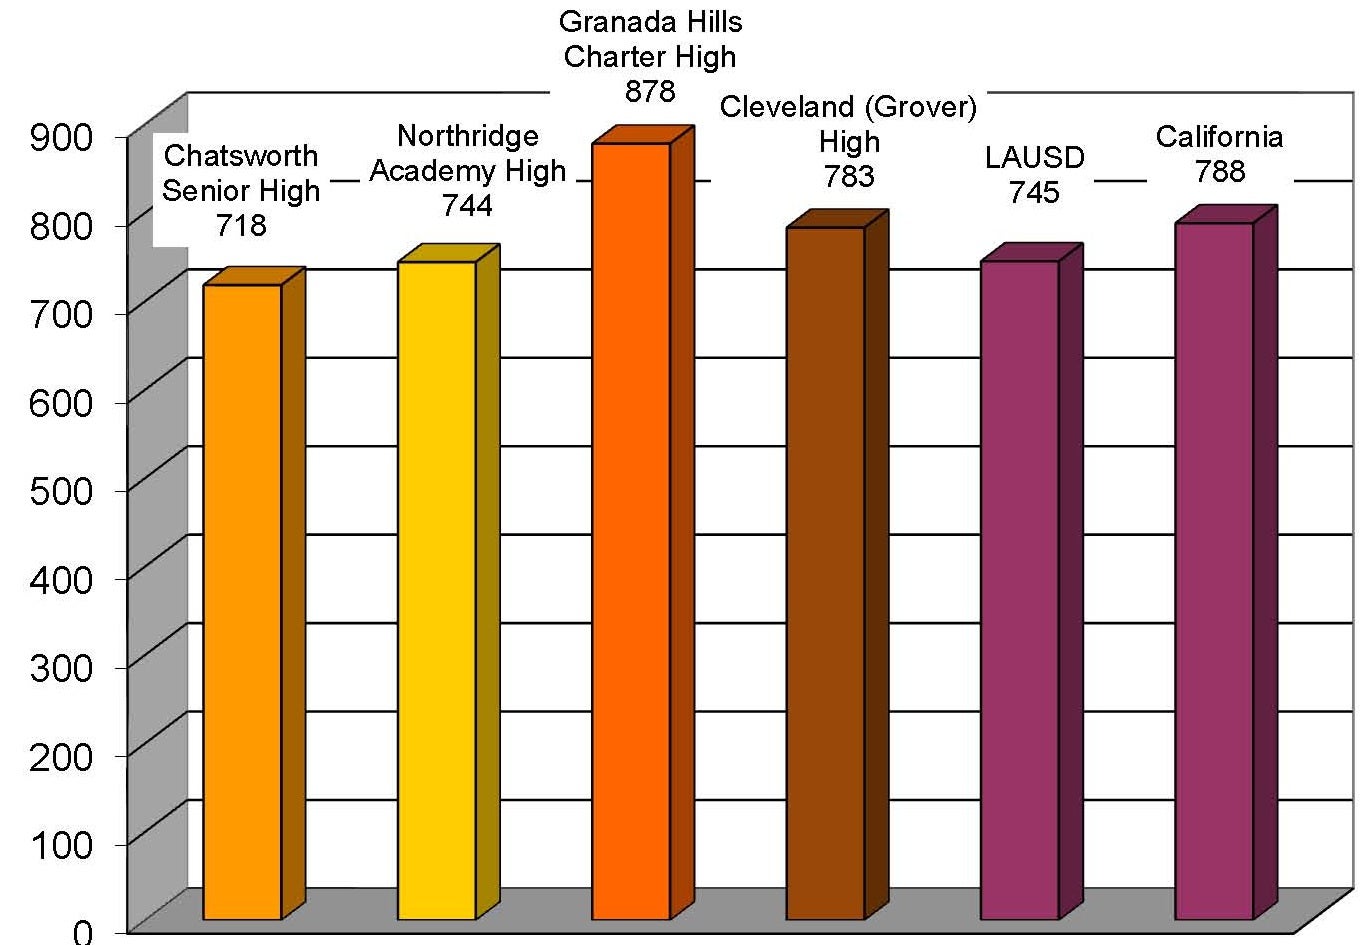 Comparison of API scores of High Schools in 2011-2012